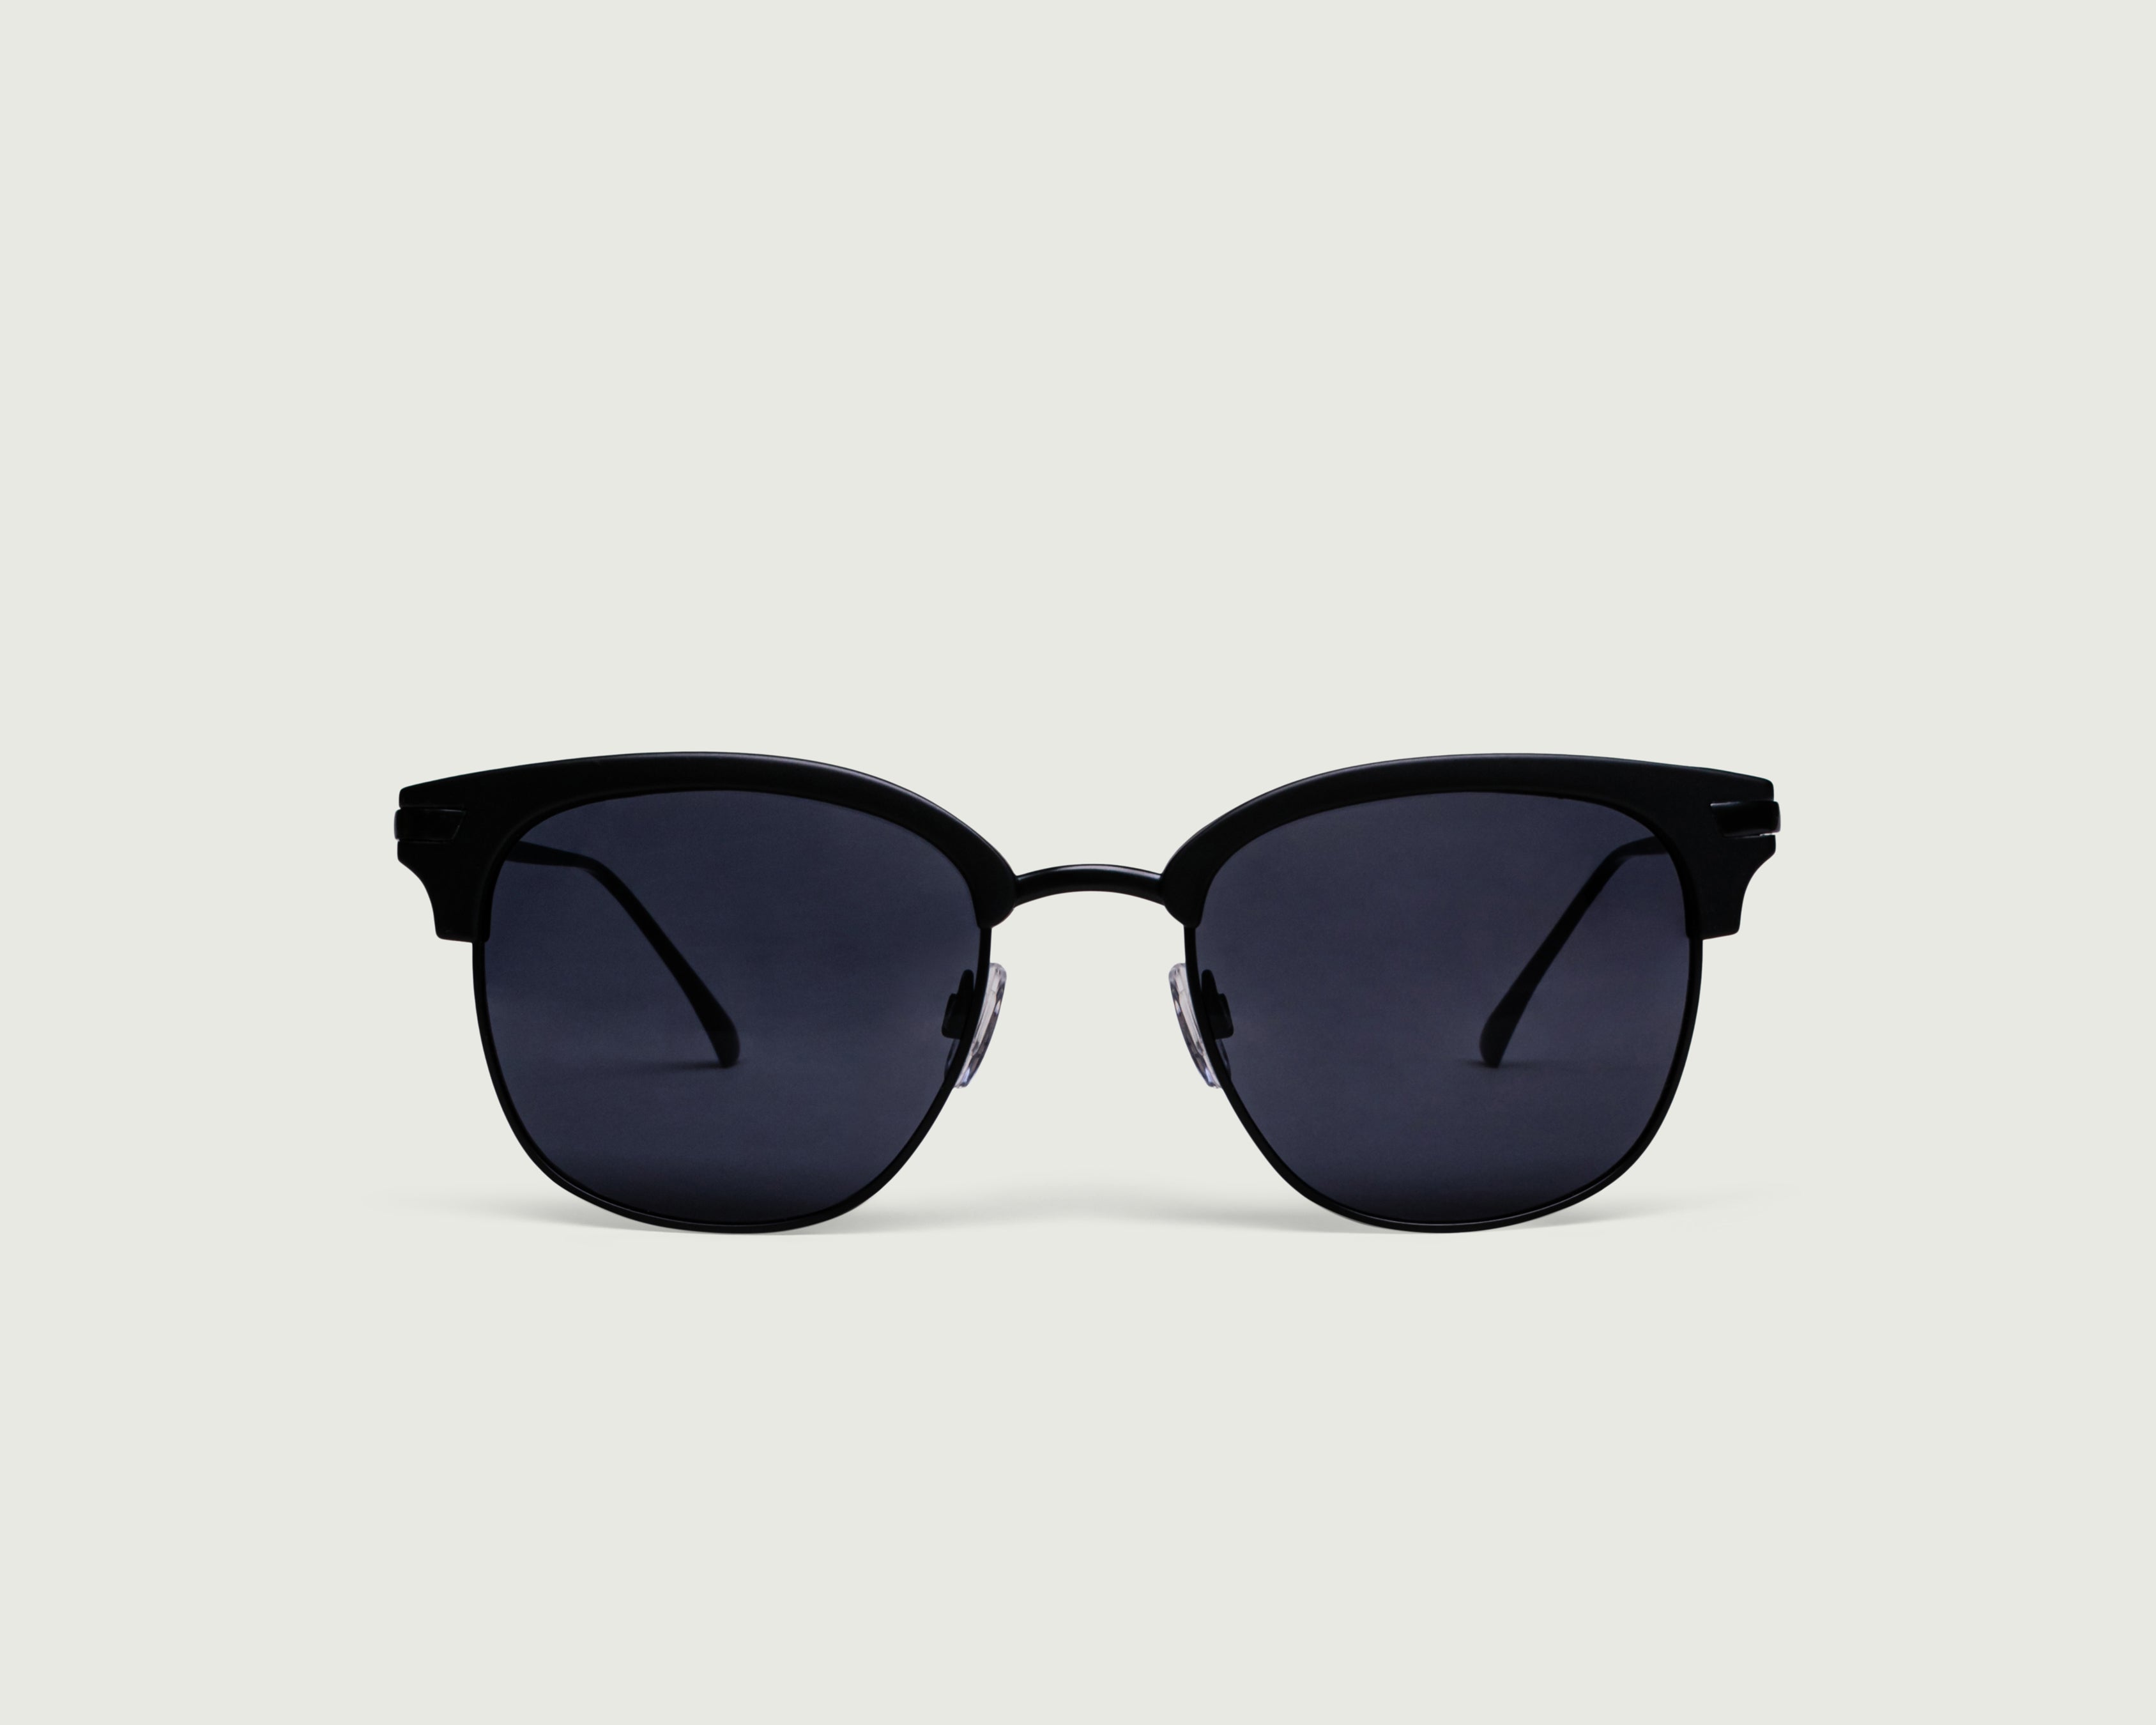 Charcoal::Axel Sunglasses browline black plastic metal front